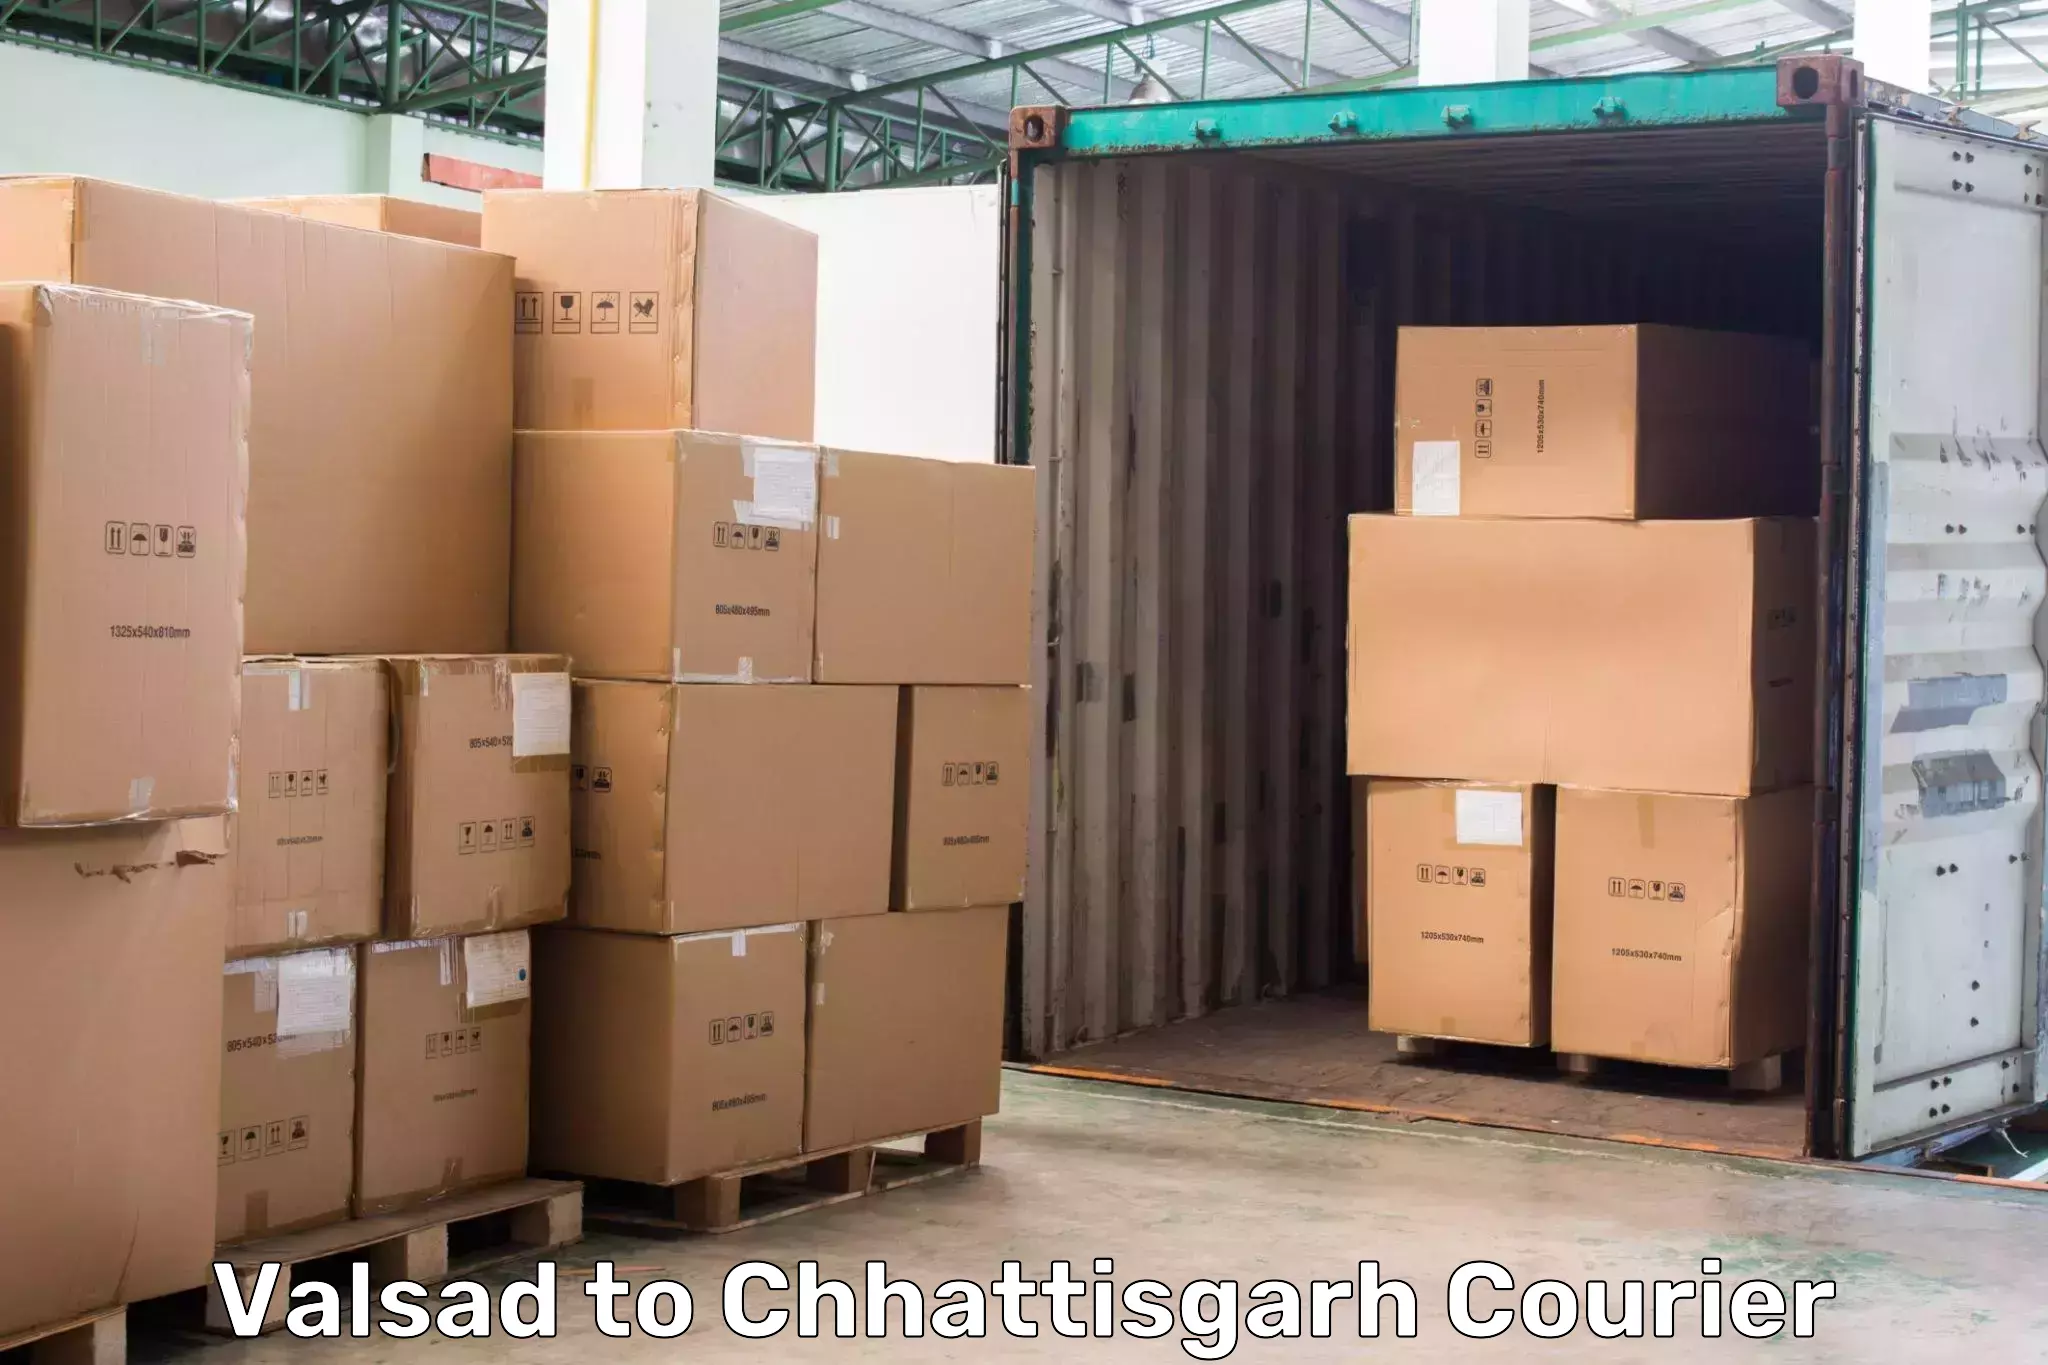 24-hour courier service Valsad to Raigarh Chhattisgarh